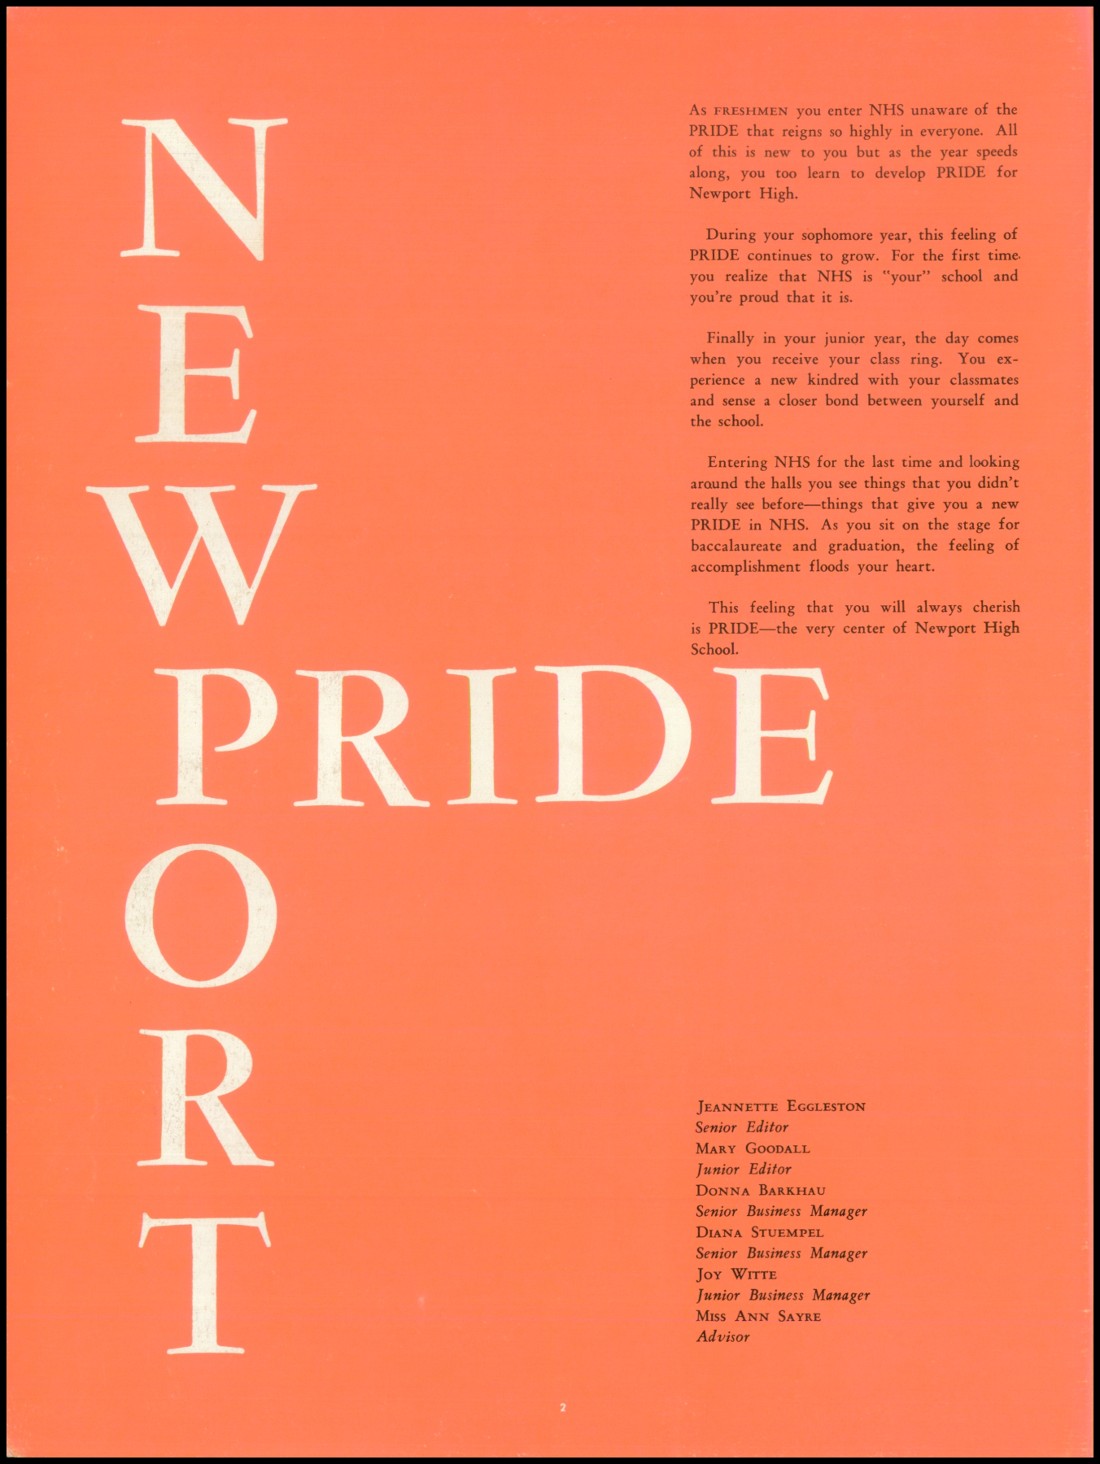 Senior Newsletter - Newport High School